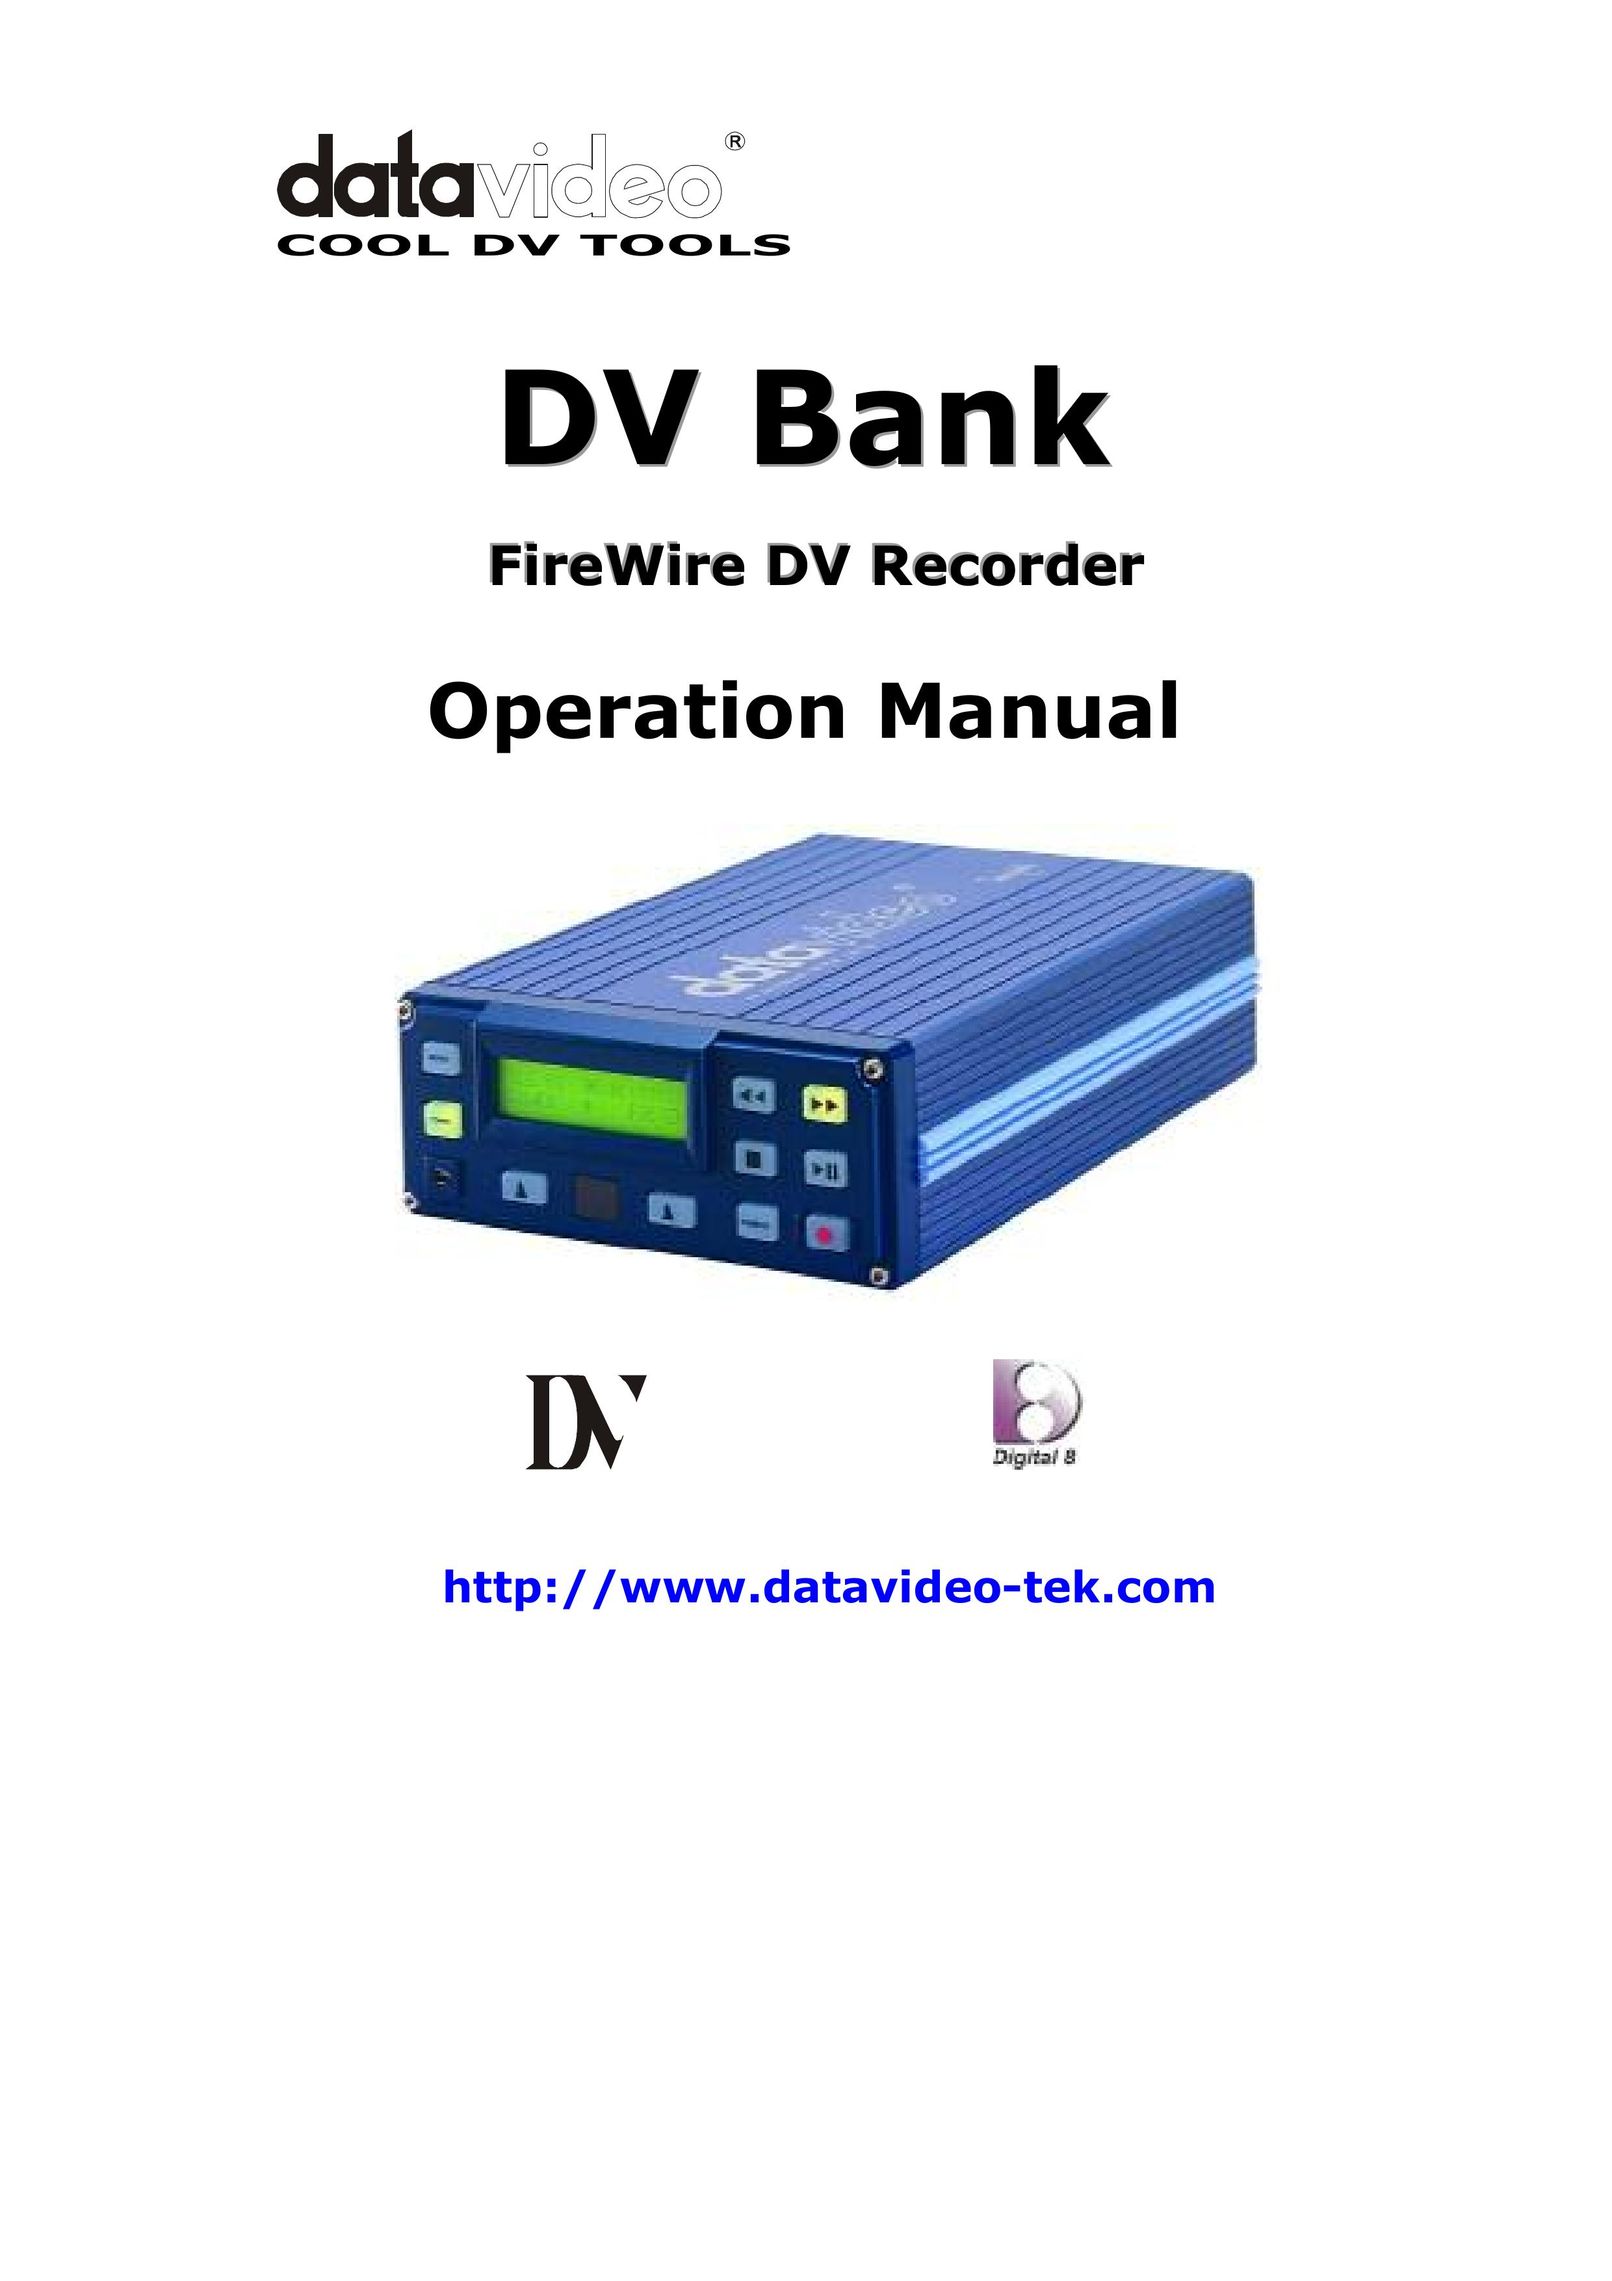 Datavideo DV Bank DVR User Manual